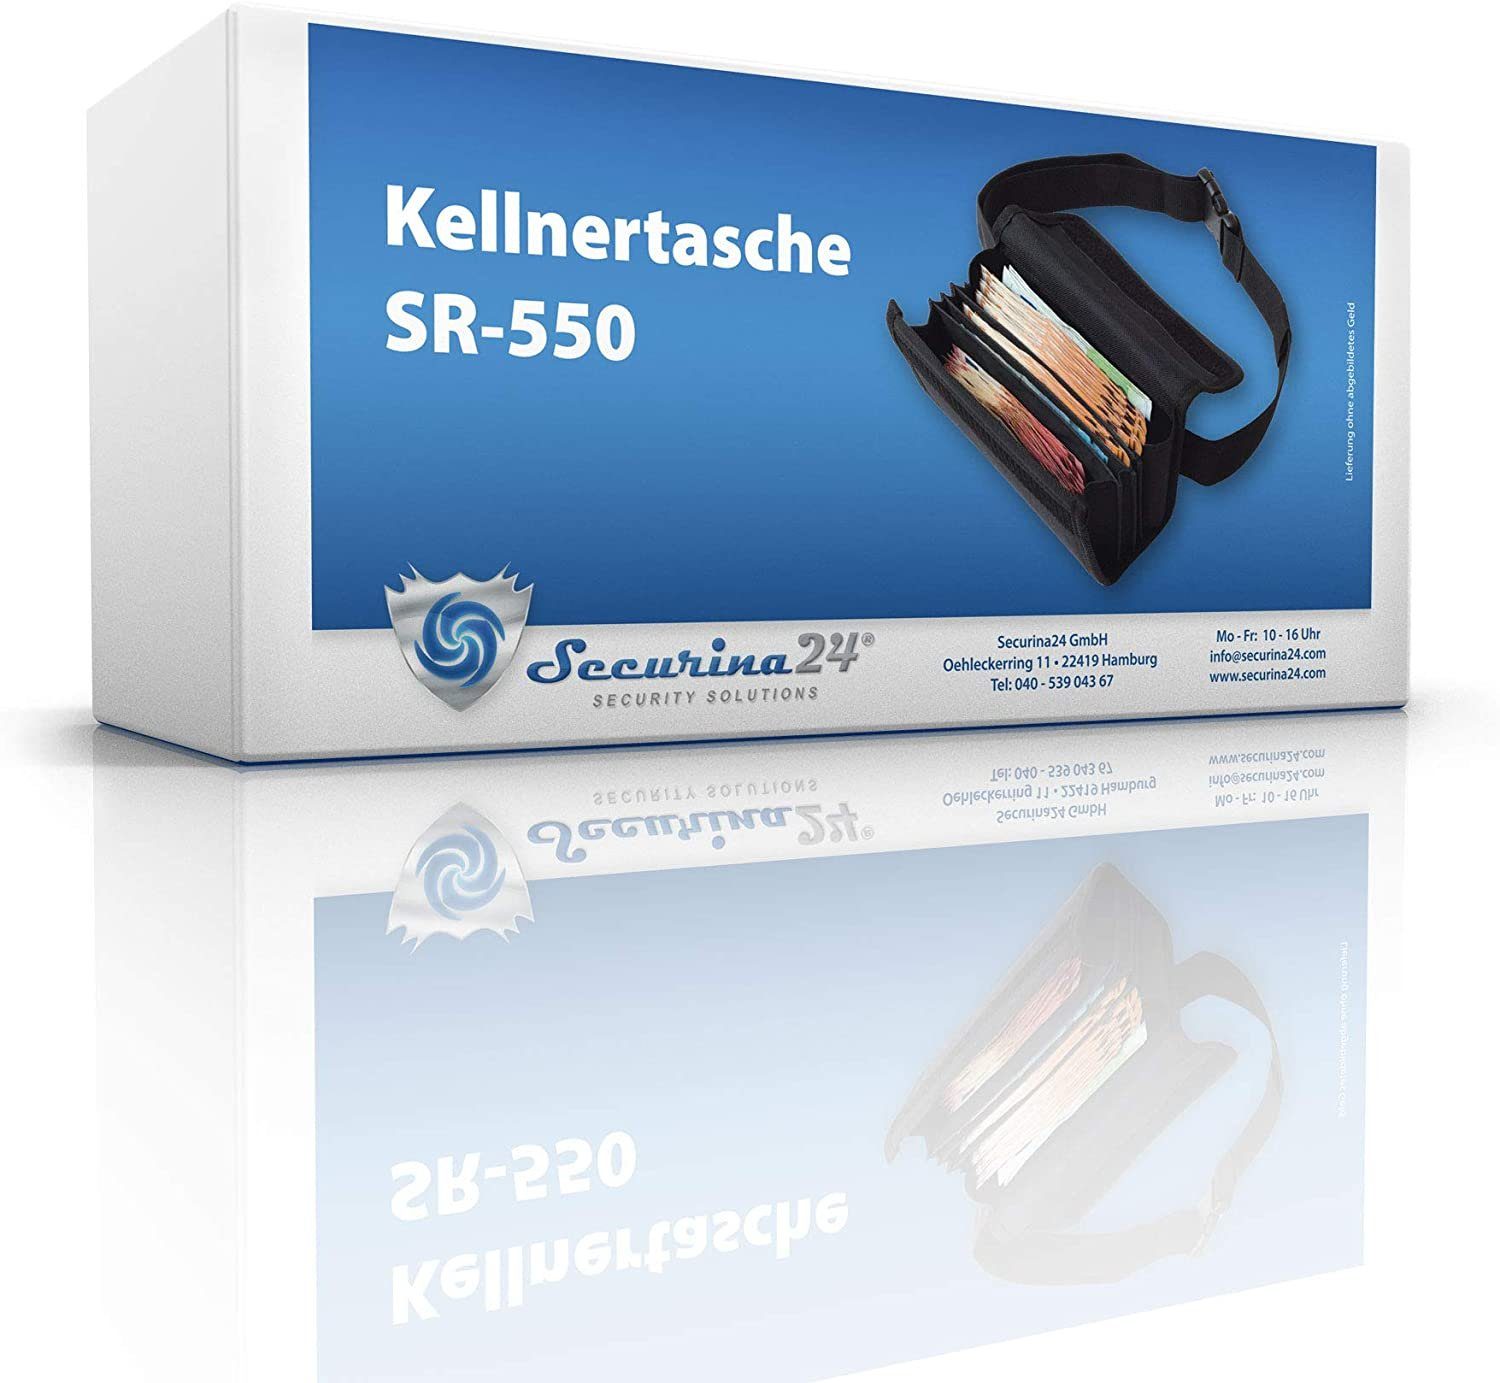 Securina24 Kellnerbörse SR-550 Kellnertasche